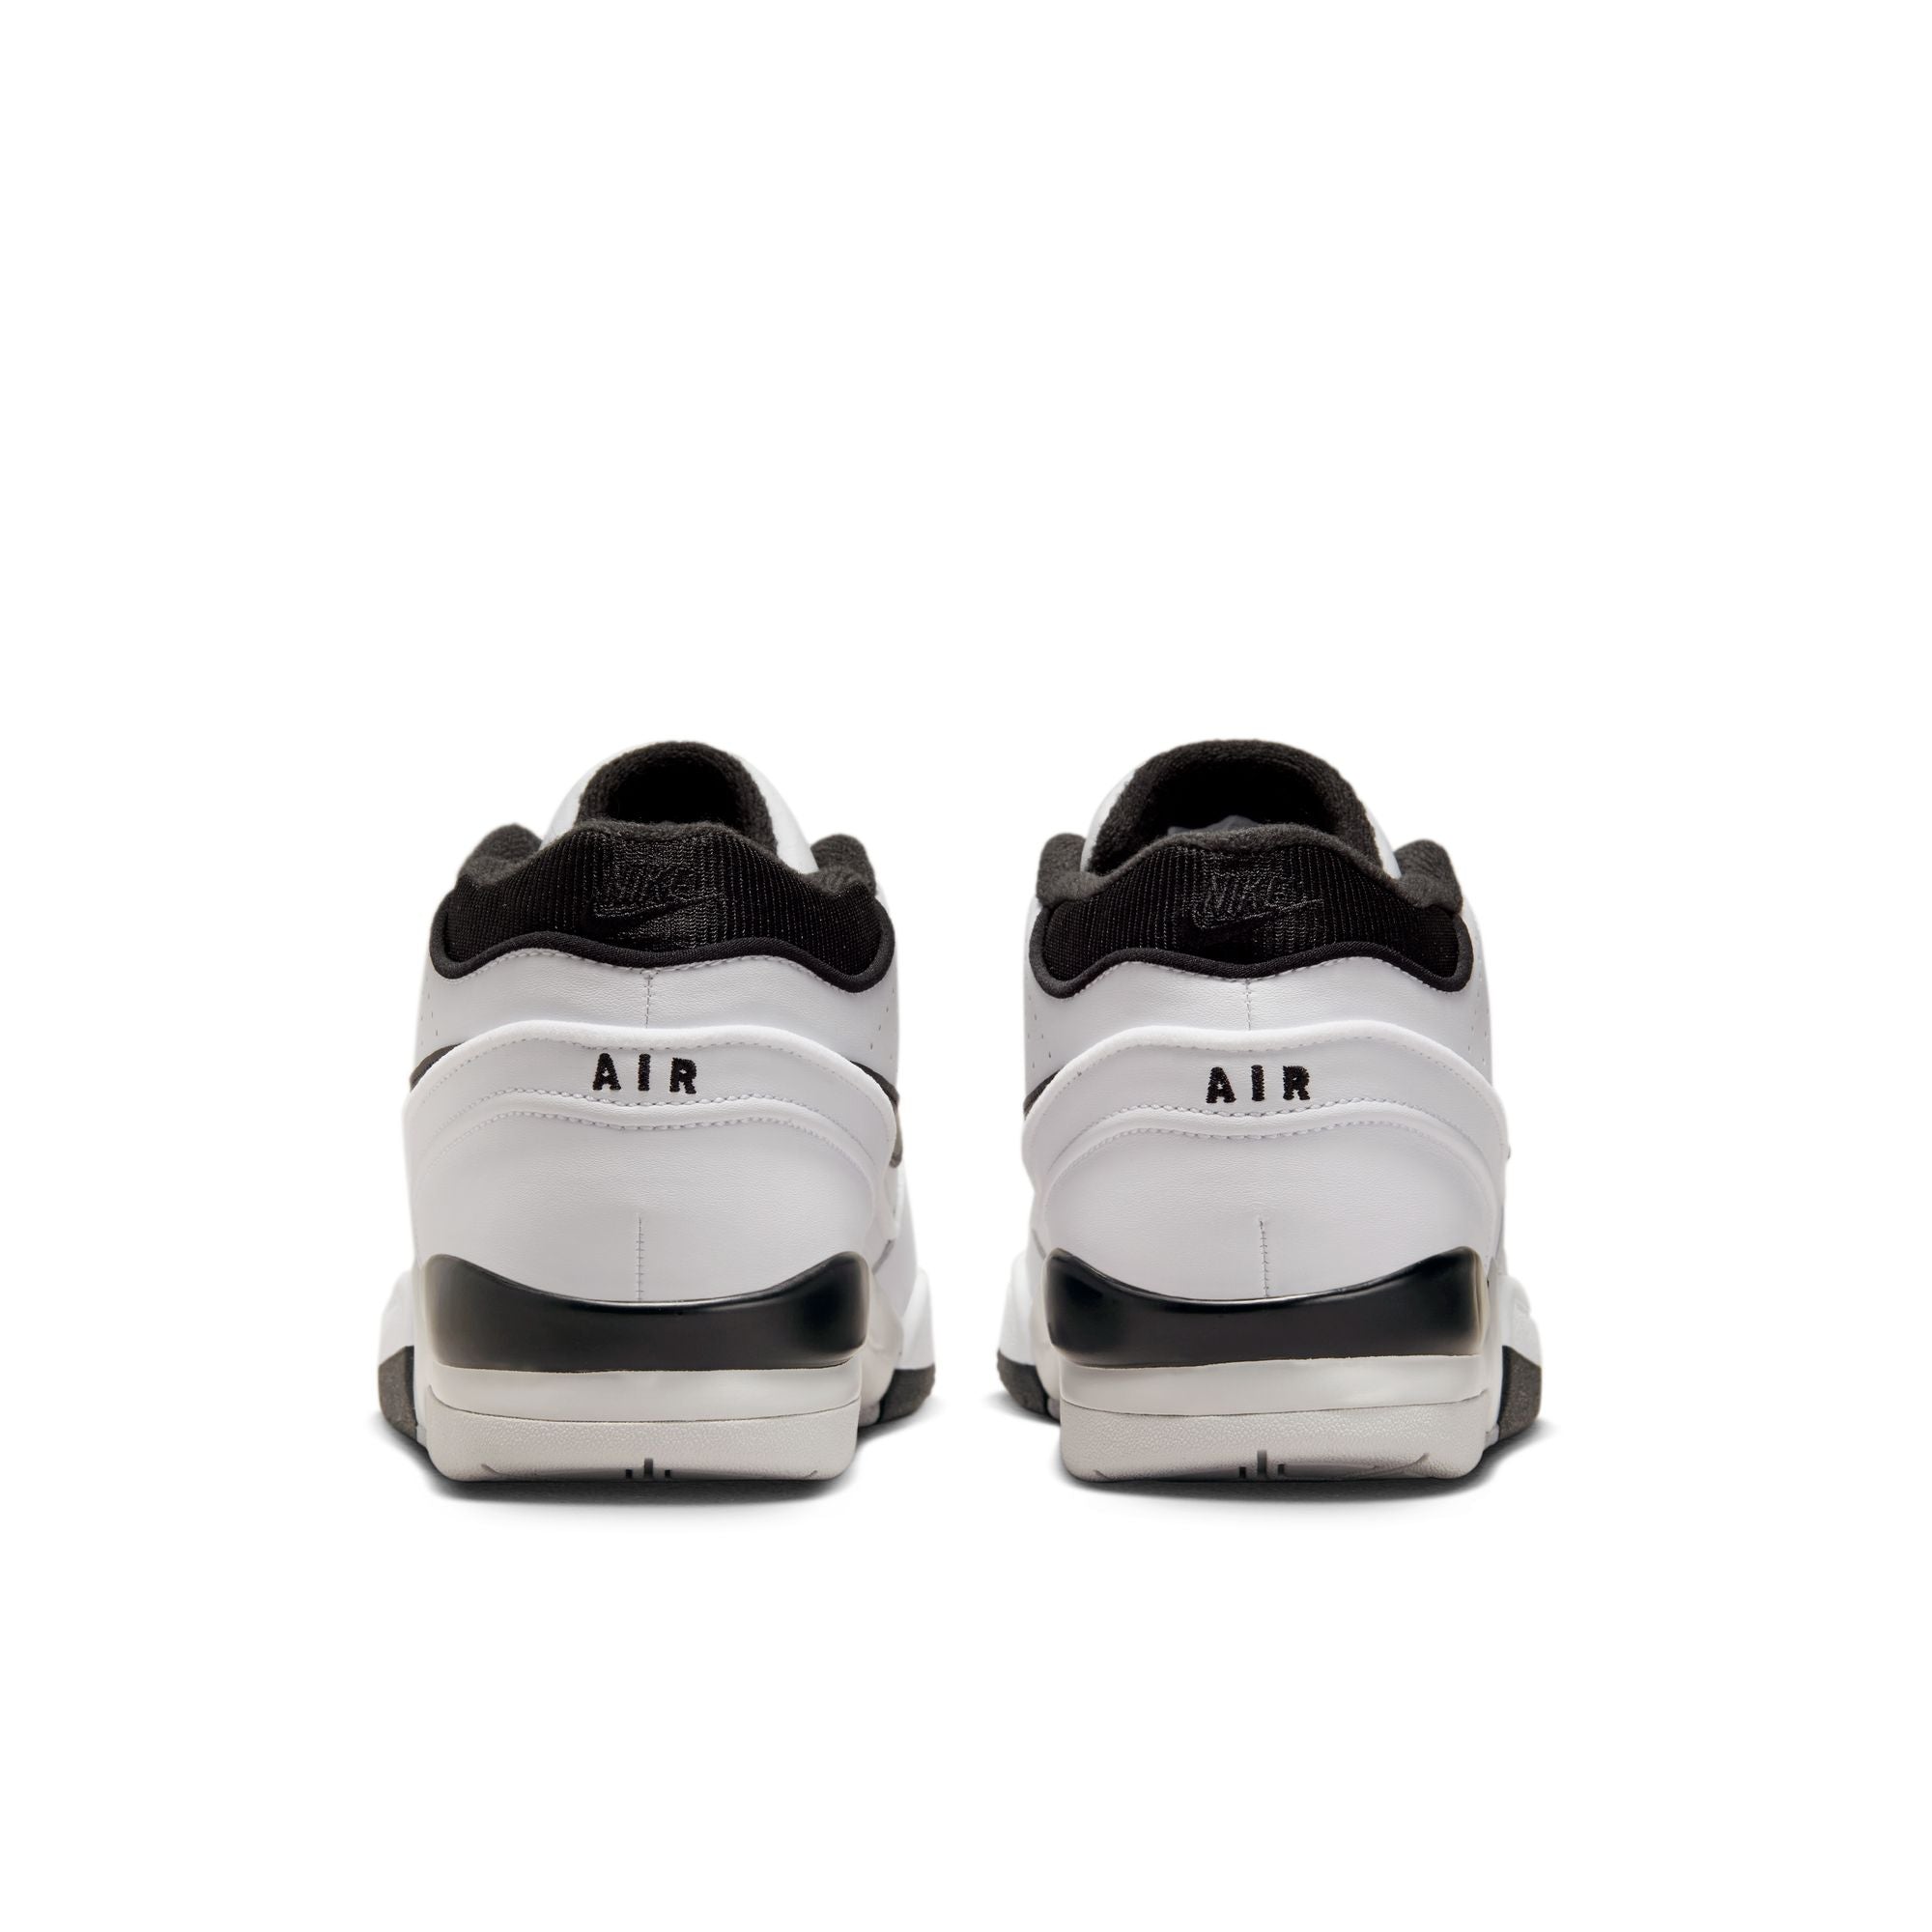 NIKE - Nike Aaf88 Sp Billie Eilish - (White/Black-Neutral Grey) view 7